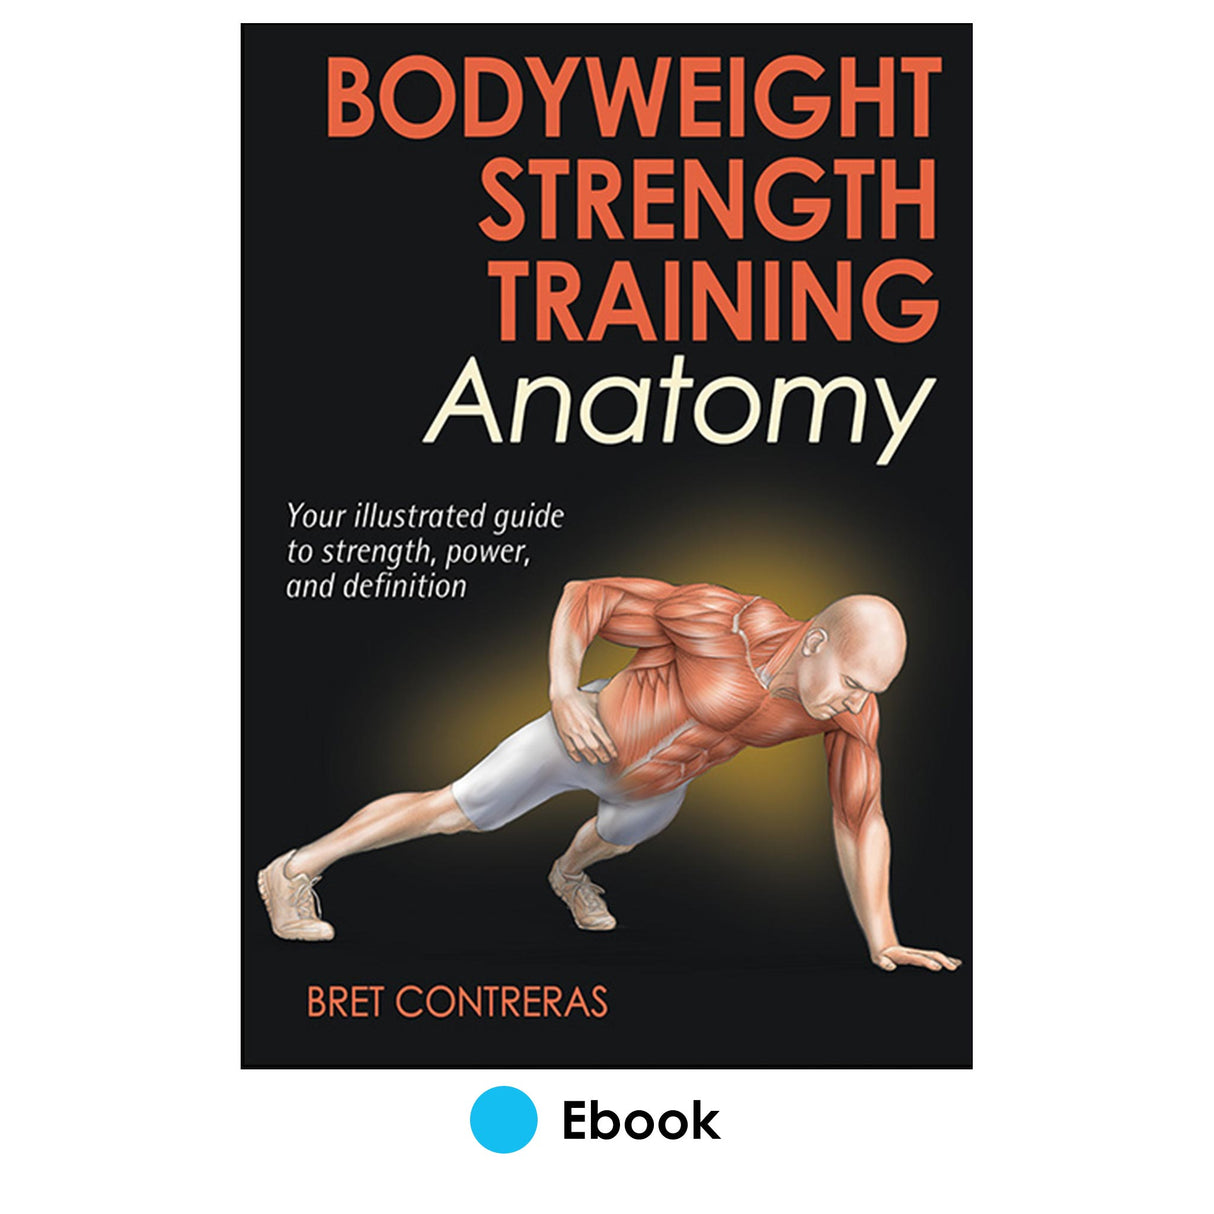 Bodyweight Strength Training Anatomy PDF